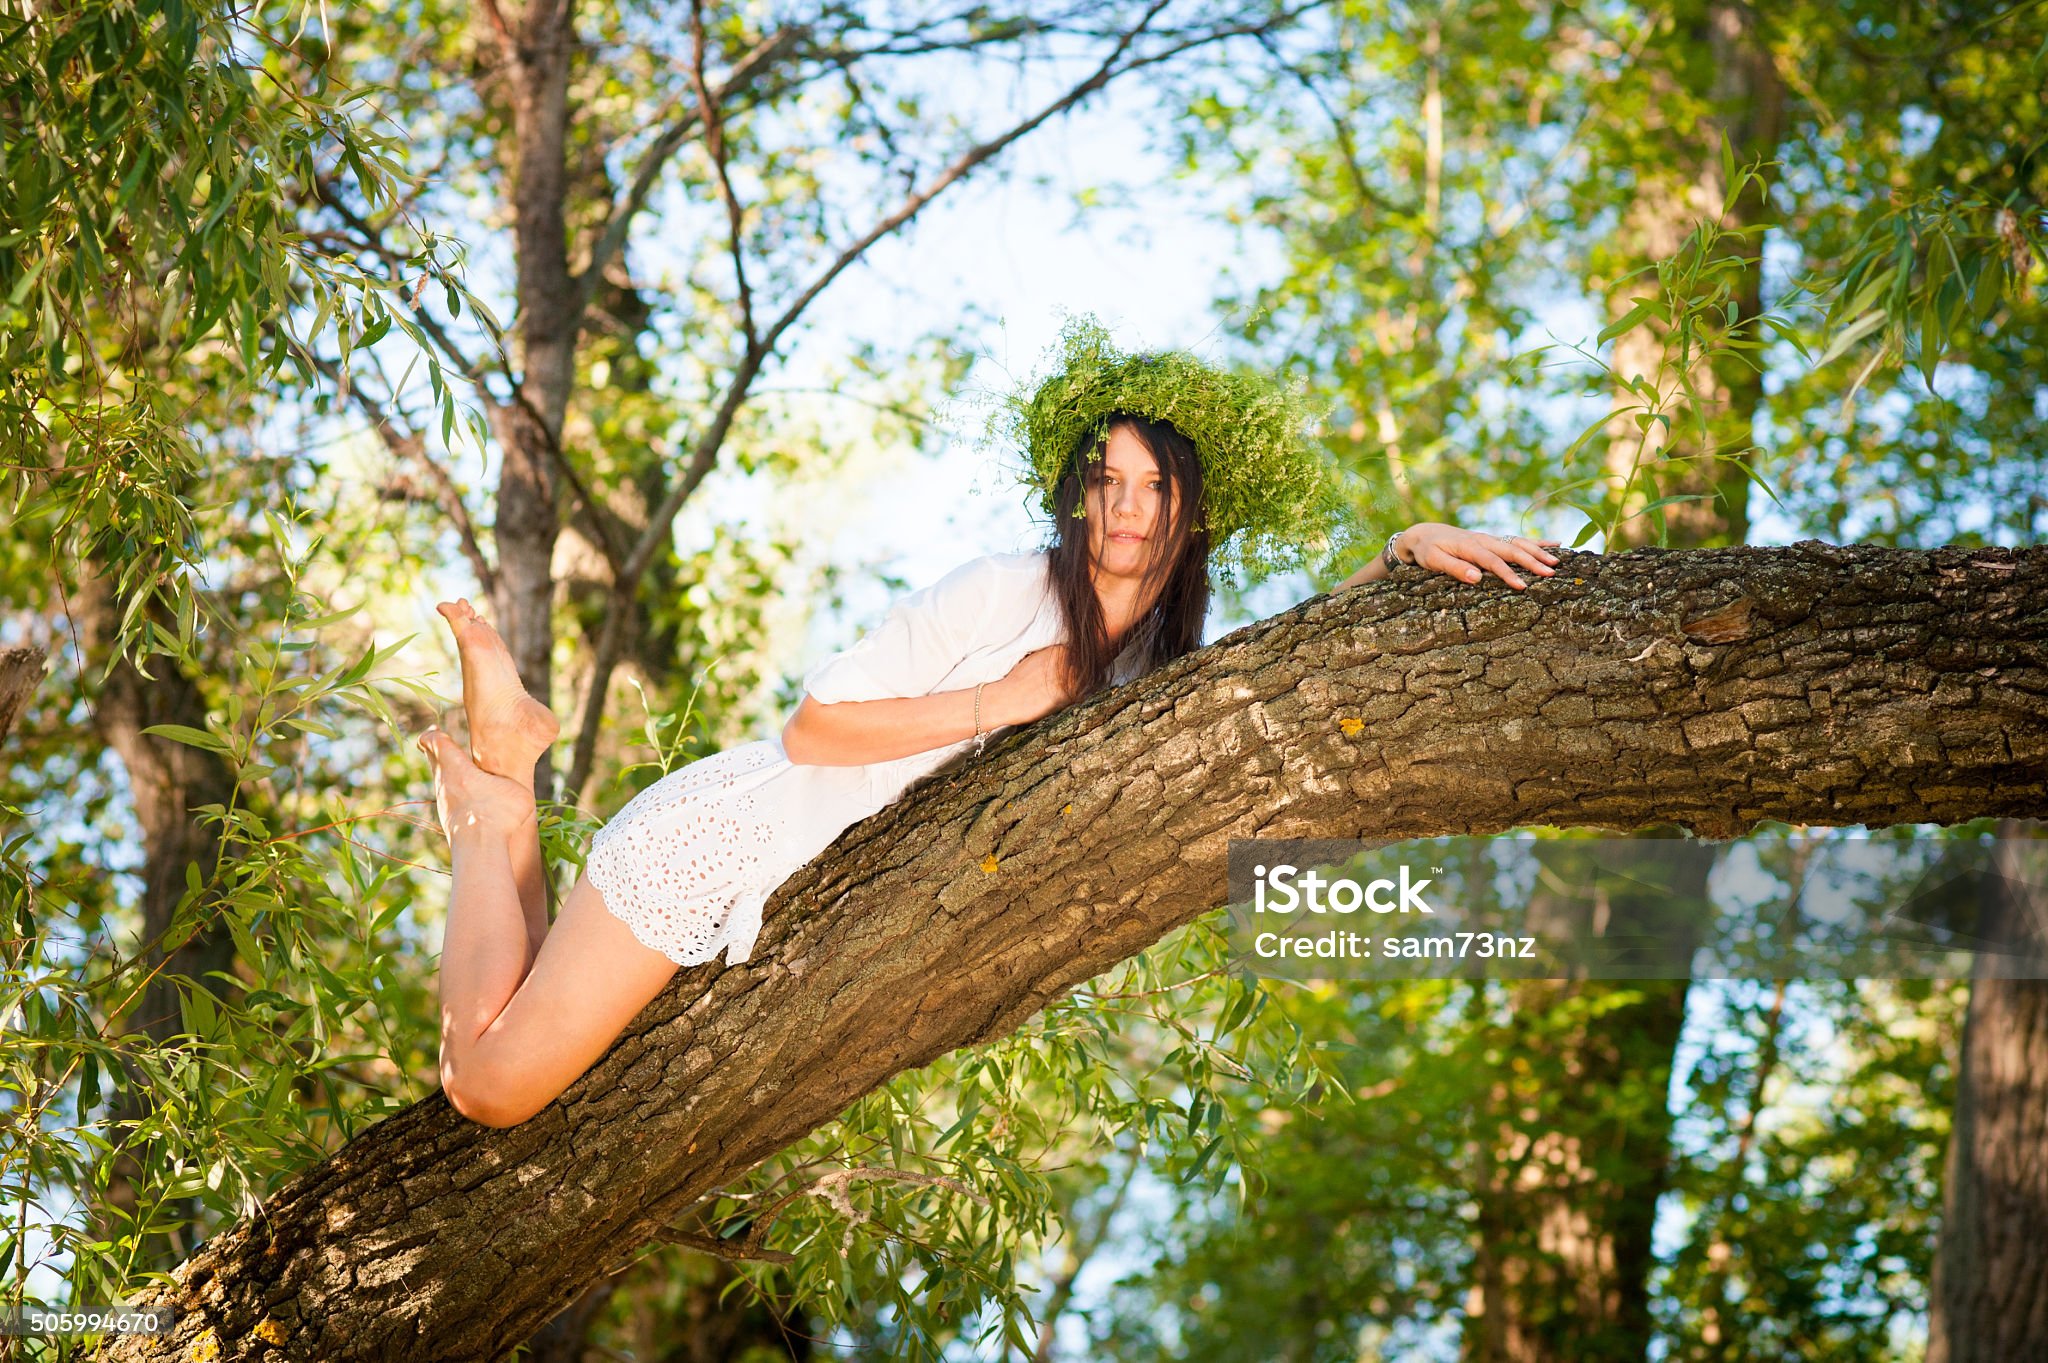 https://media.istockphoto.com/id/505994670/photo/beautiful-woman-lying-on-tree-in-forest.jpg?s=2048x2048&amp;w=is&amp;k=20&amp;c=DM00HZK8occnPoxNu4oHmbNGwQr_V1h4bqS2UCfmfIo=